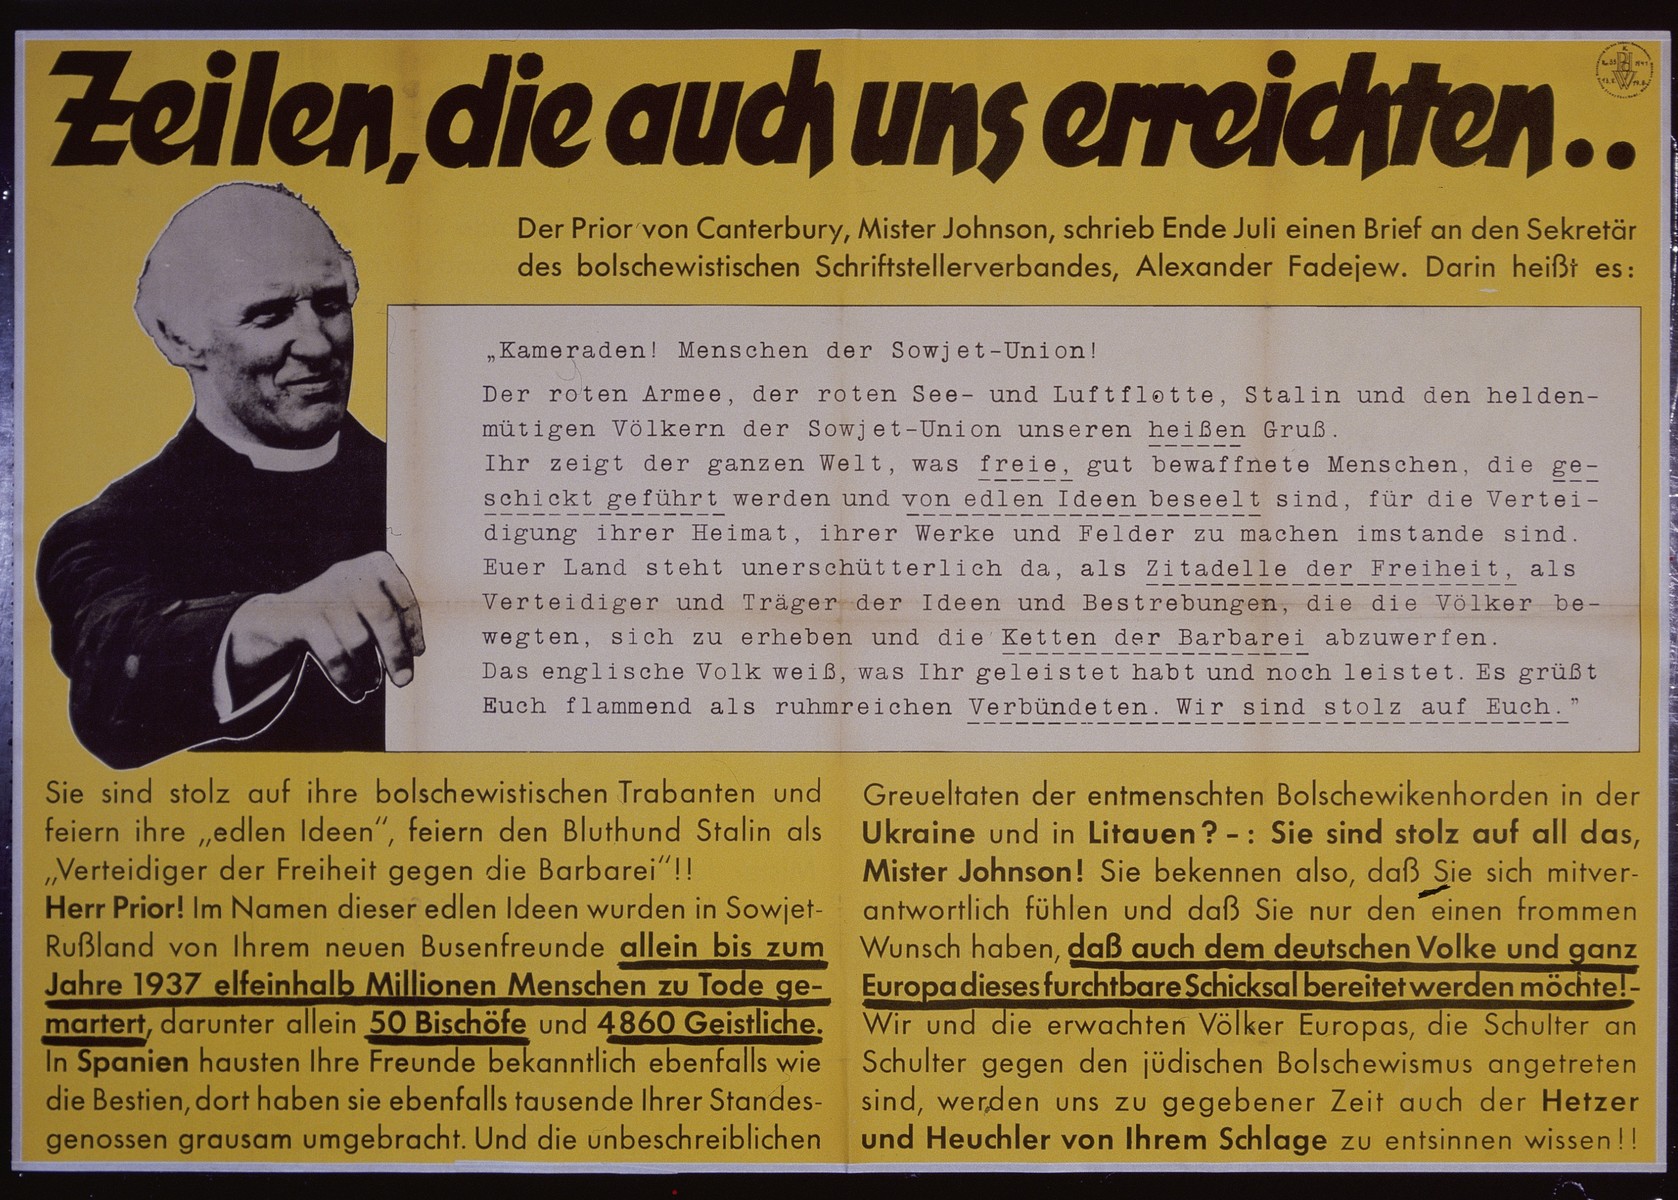 Nazi propaganda poster entitled, "Zeilen, die auch uns erreichten..." issued by the "Parole der Woche," a wall newspaper (Wandzeitung) published by the National Socialist Party propaganda office in Munich.